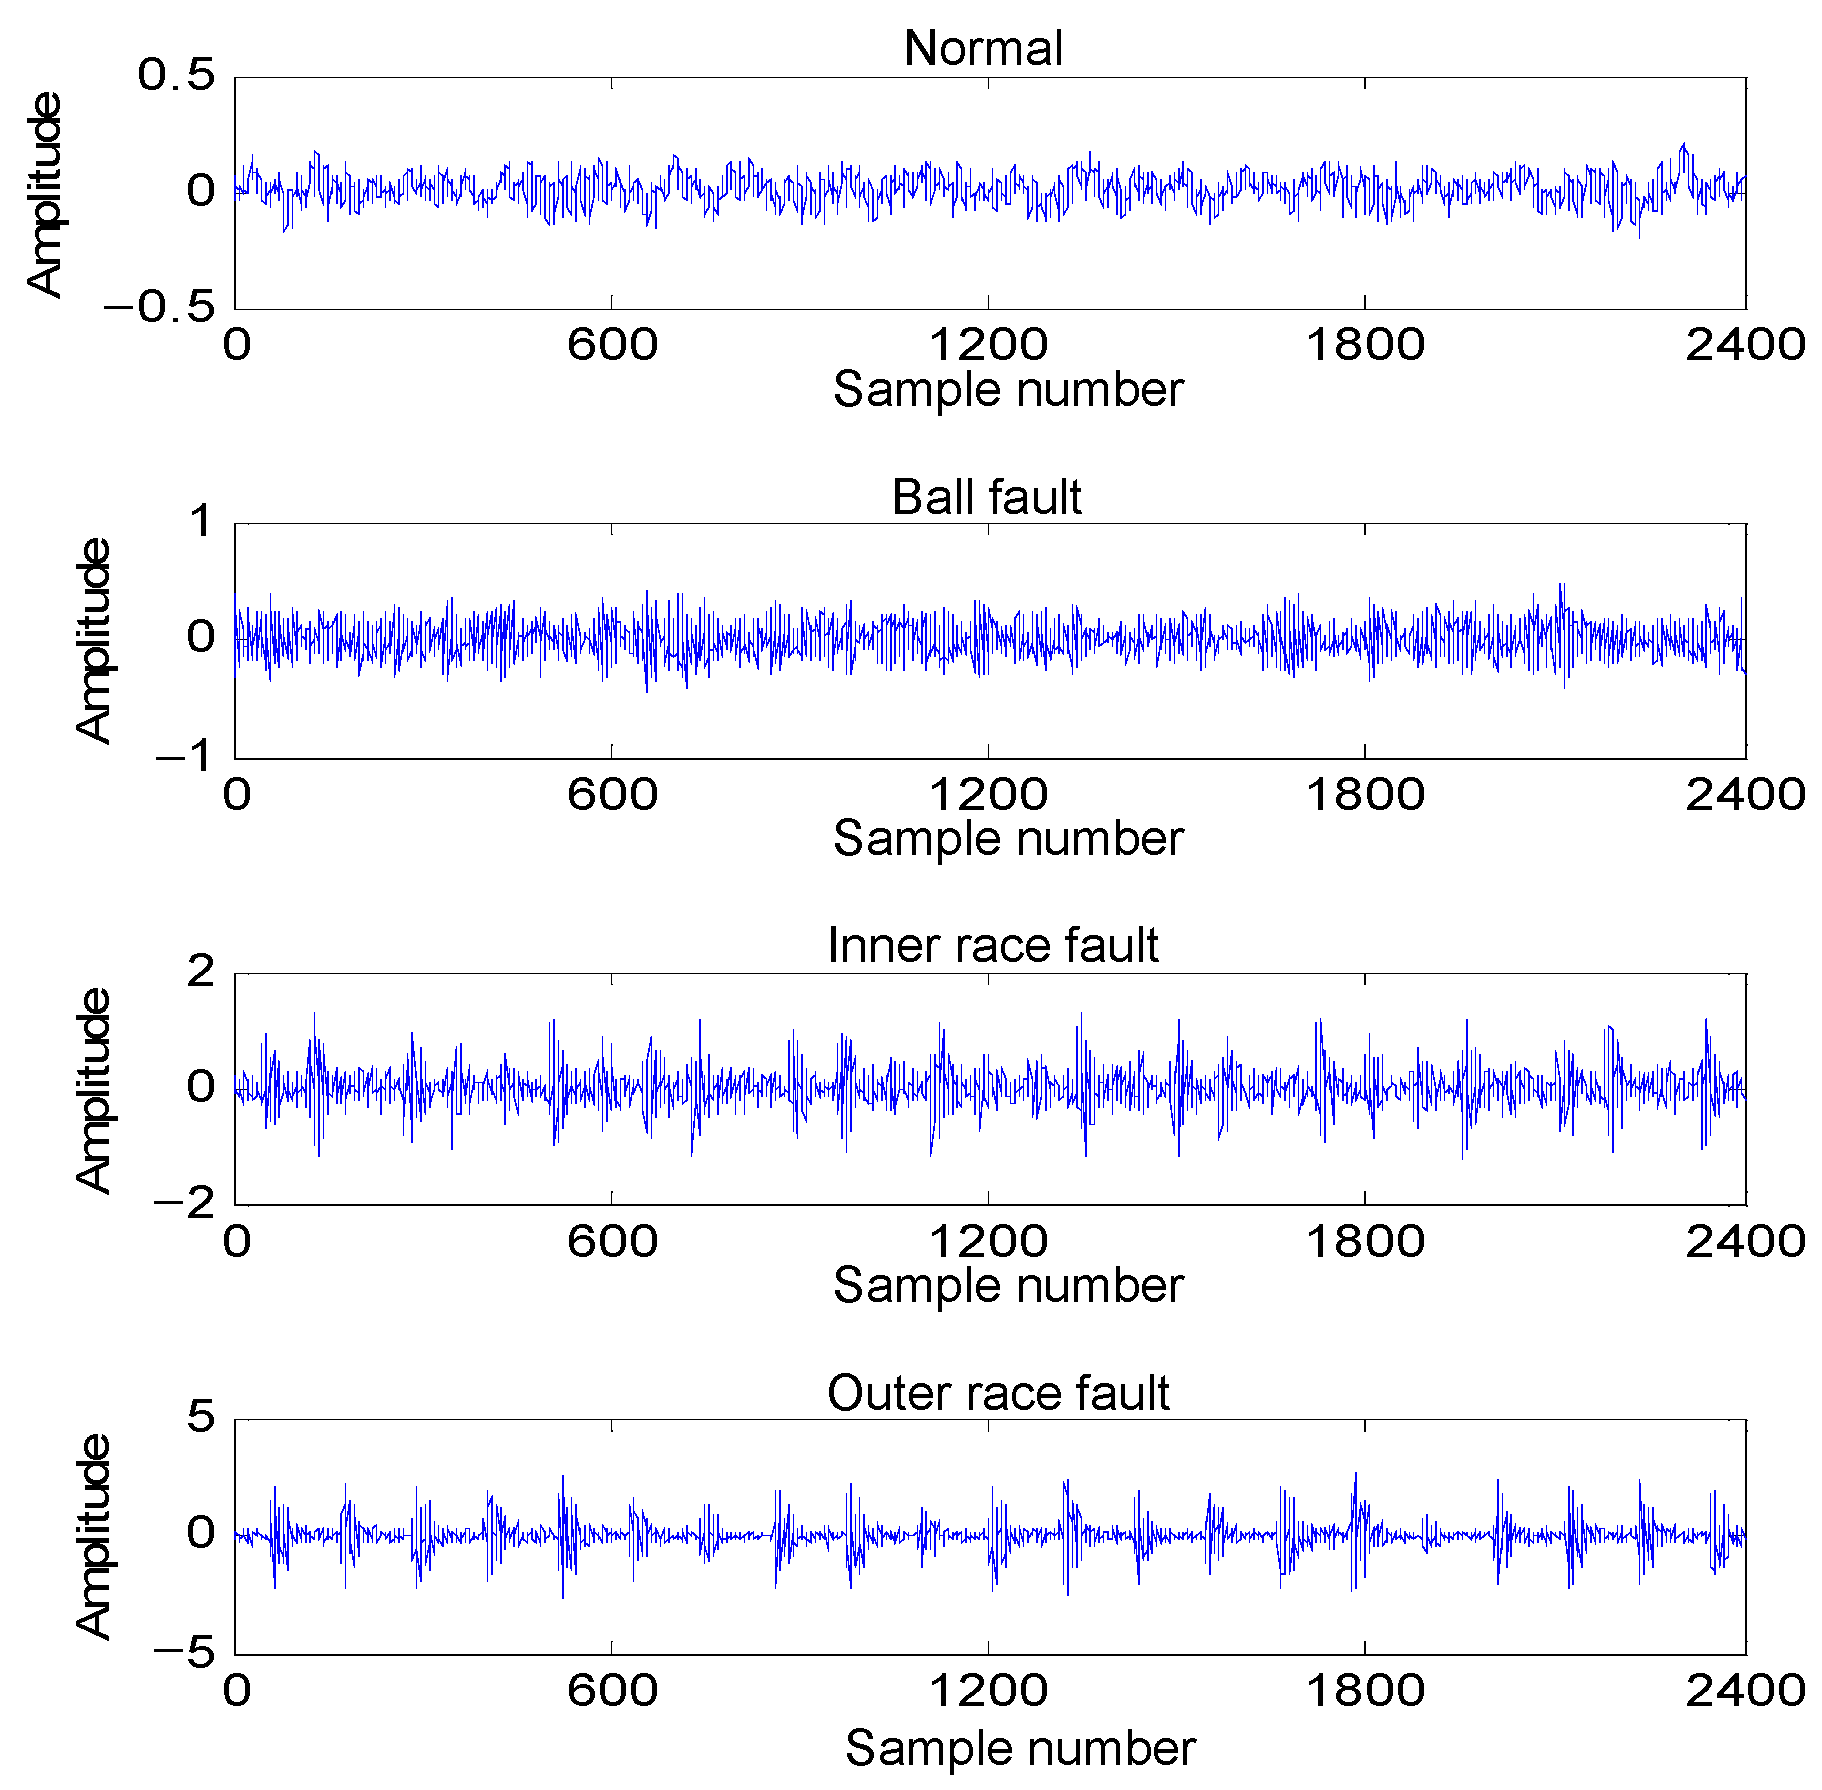 Illustrated Vibration Diagnostic Chart